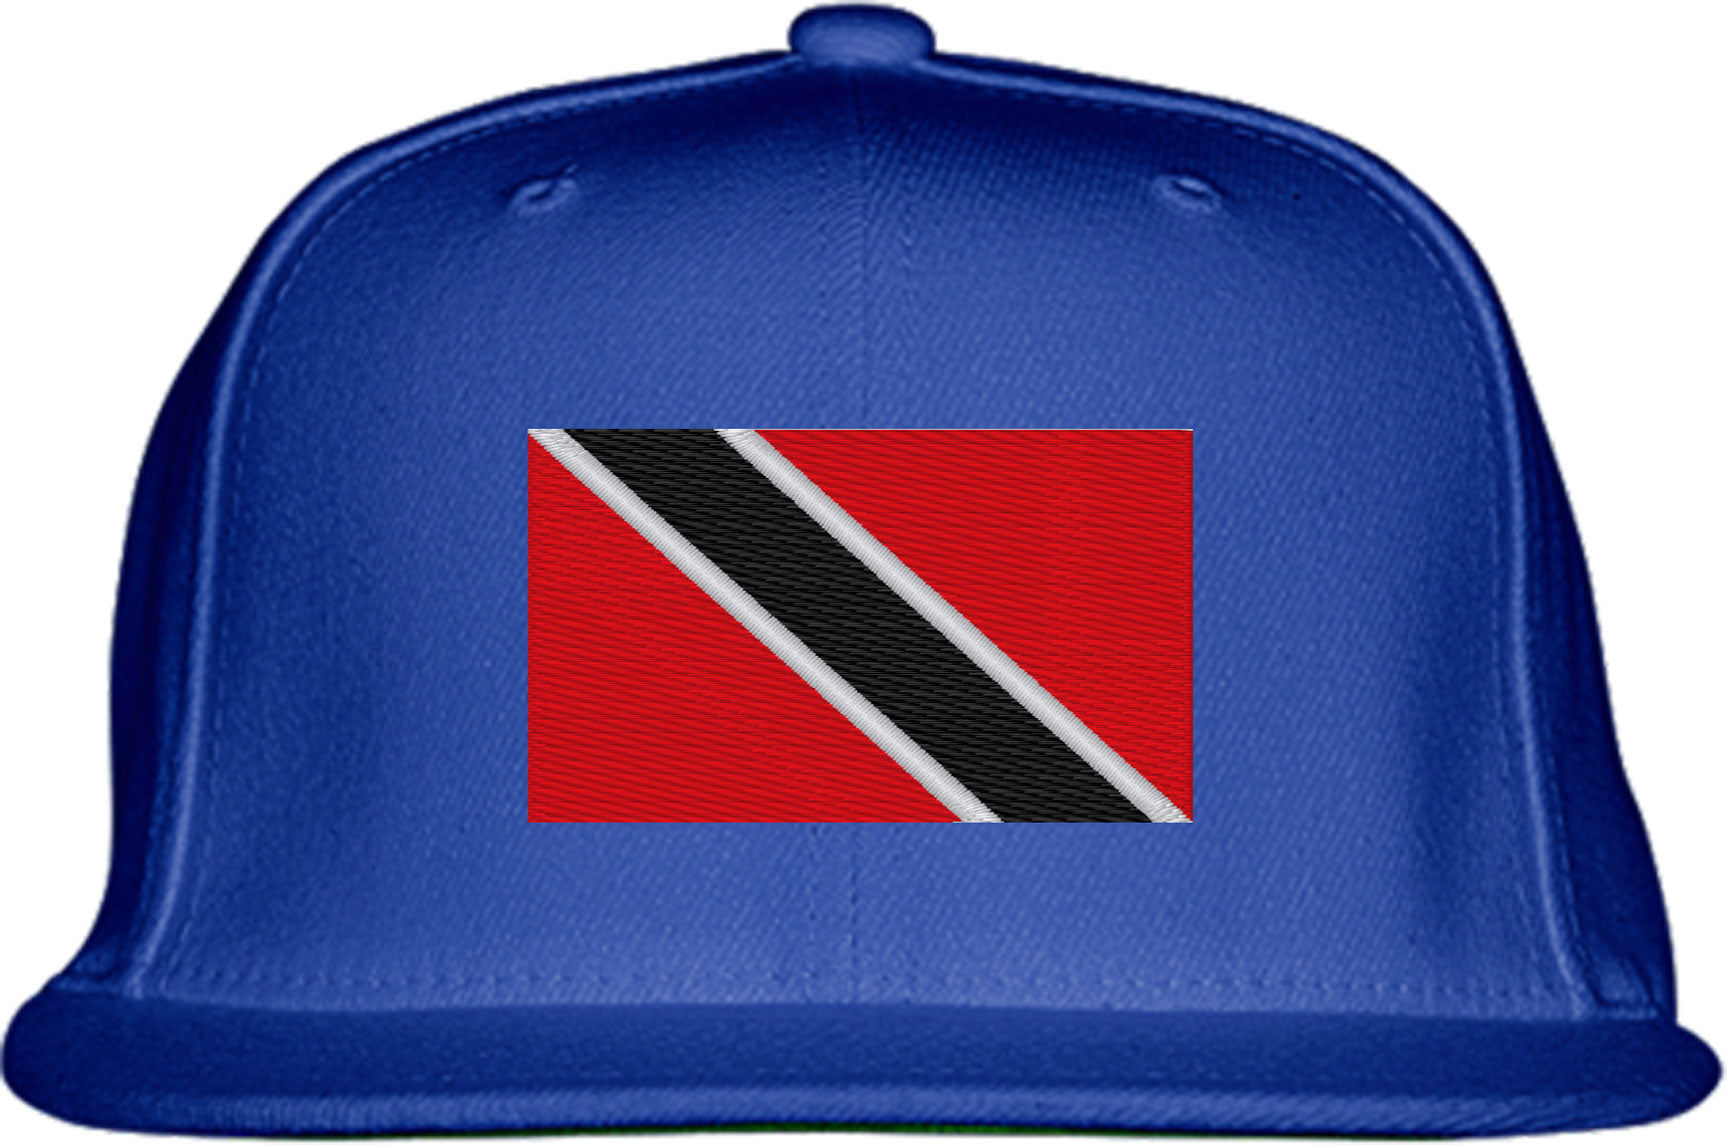 Trinidad & Tobago Snapback: White